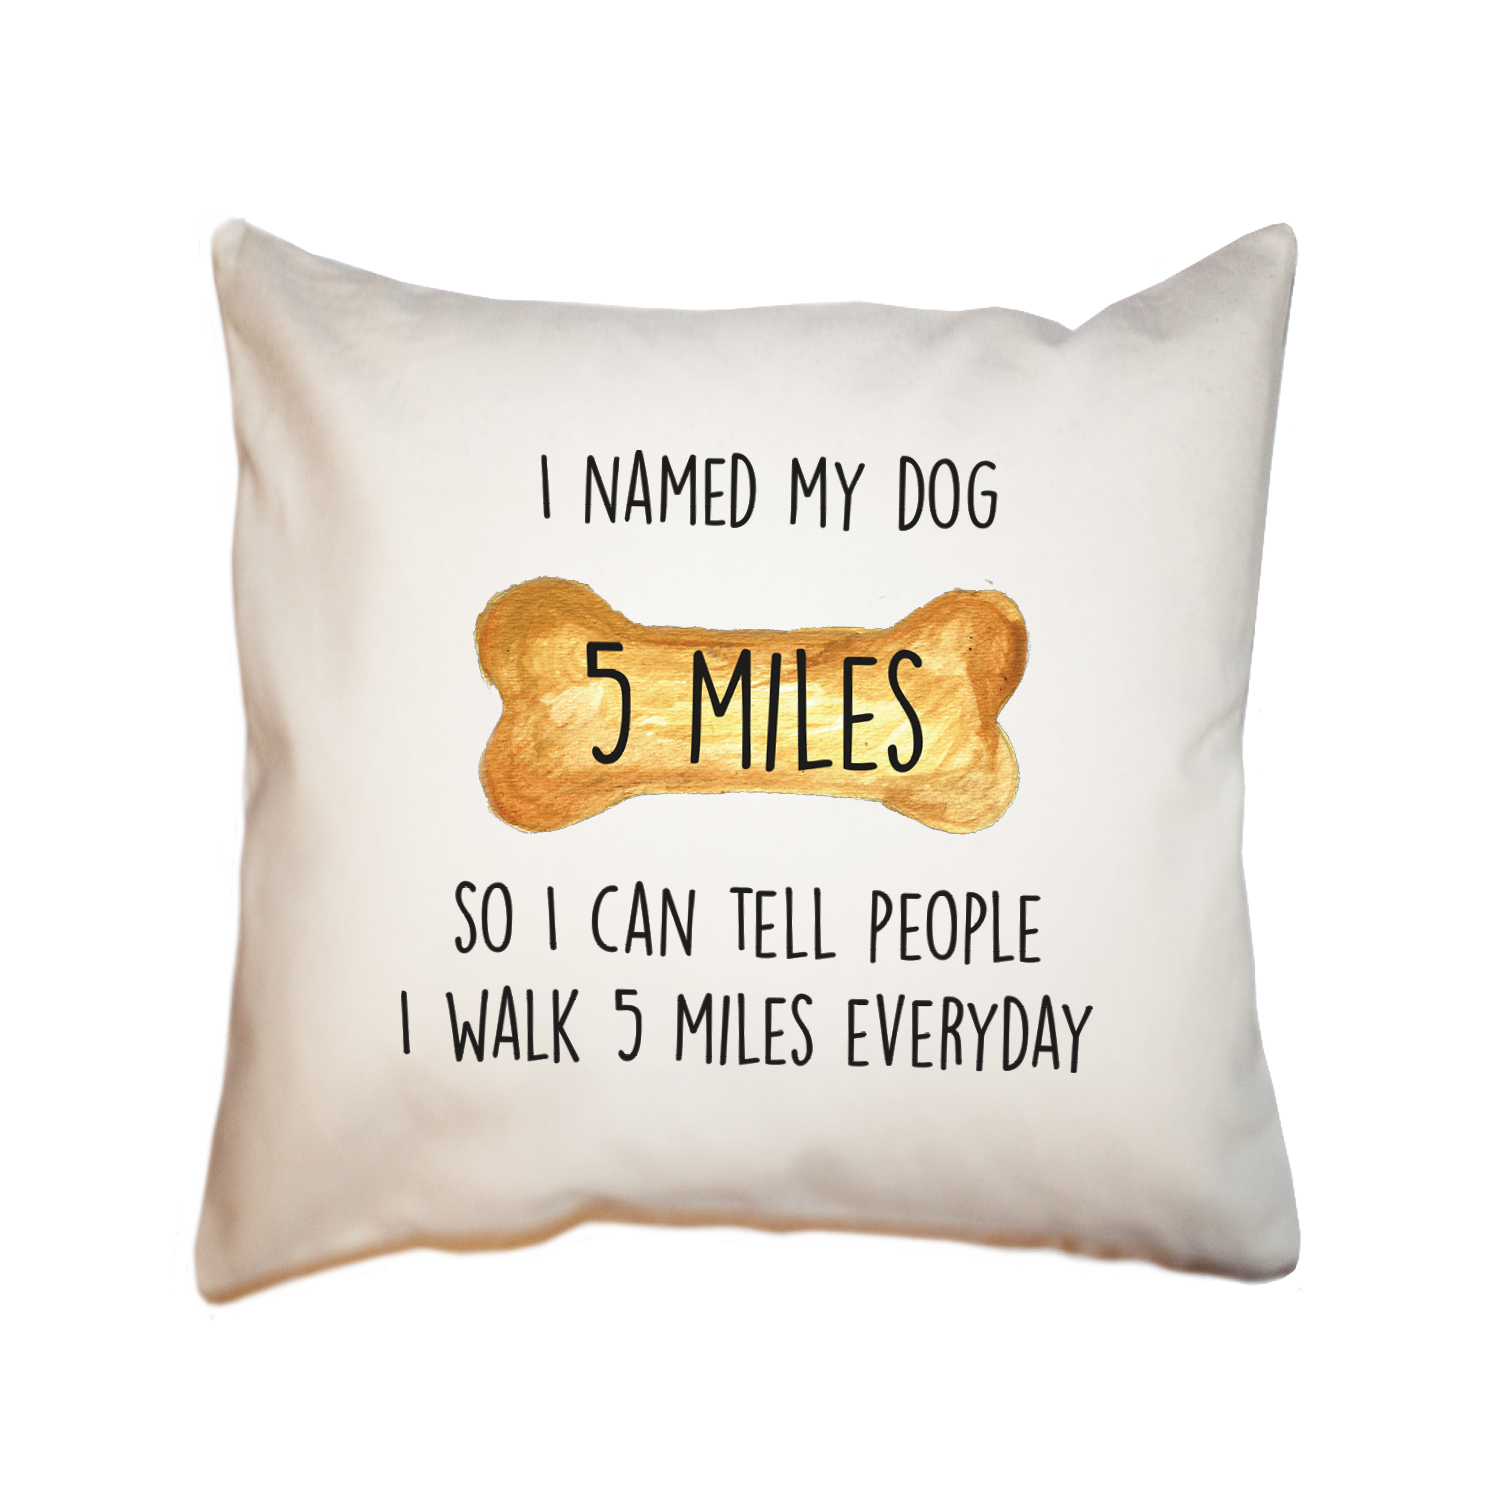 5 miles square pillow